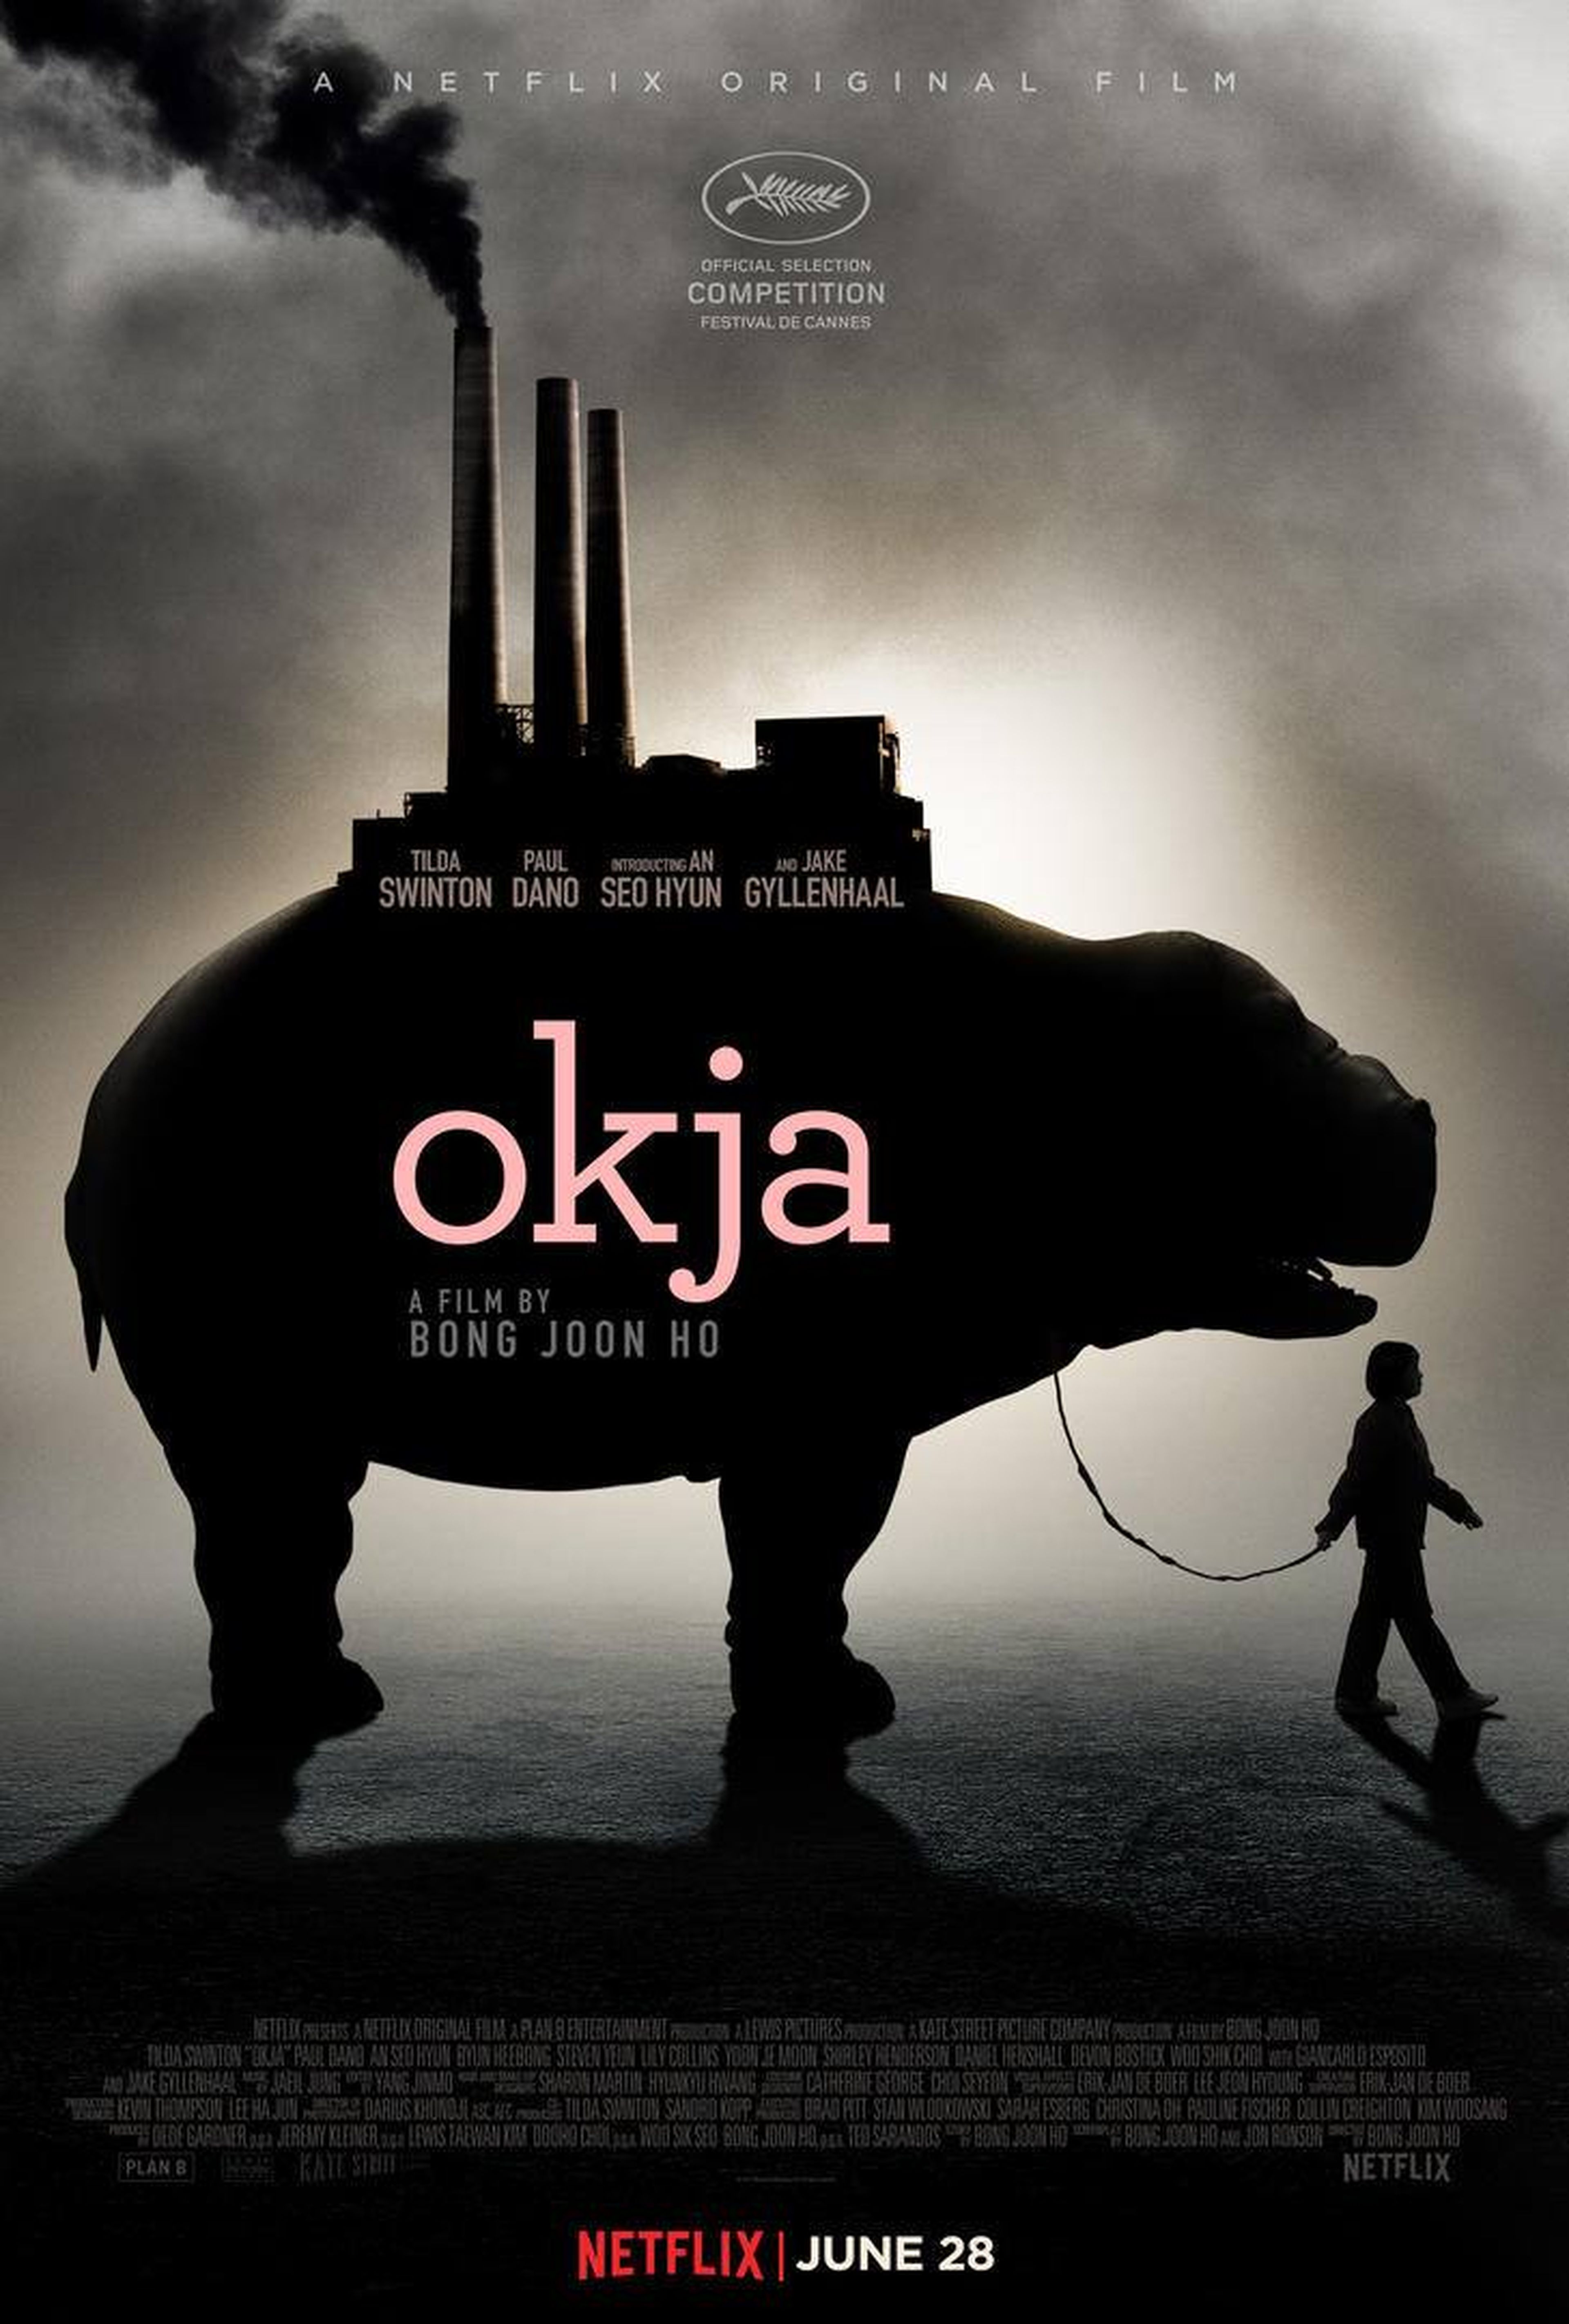 Póster promocional de Okja